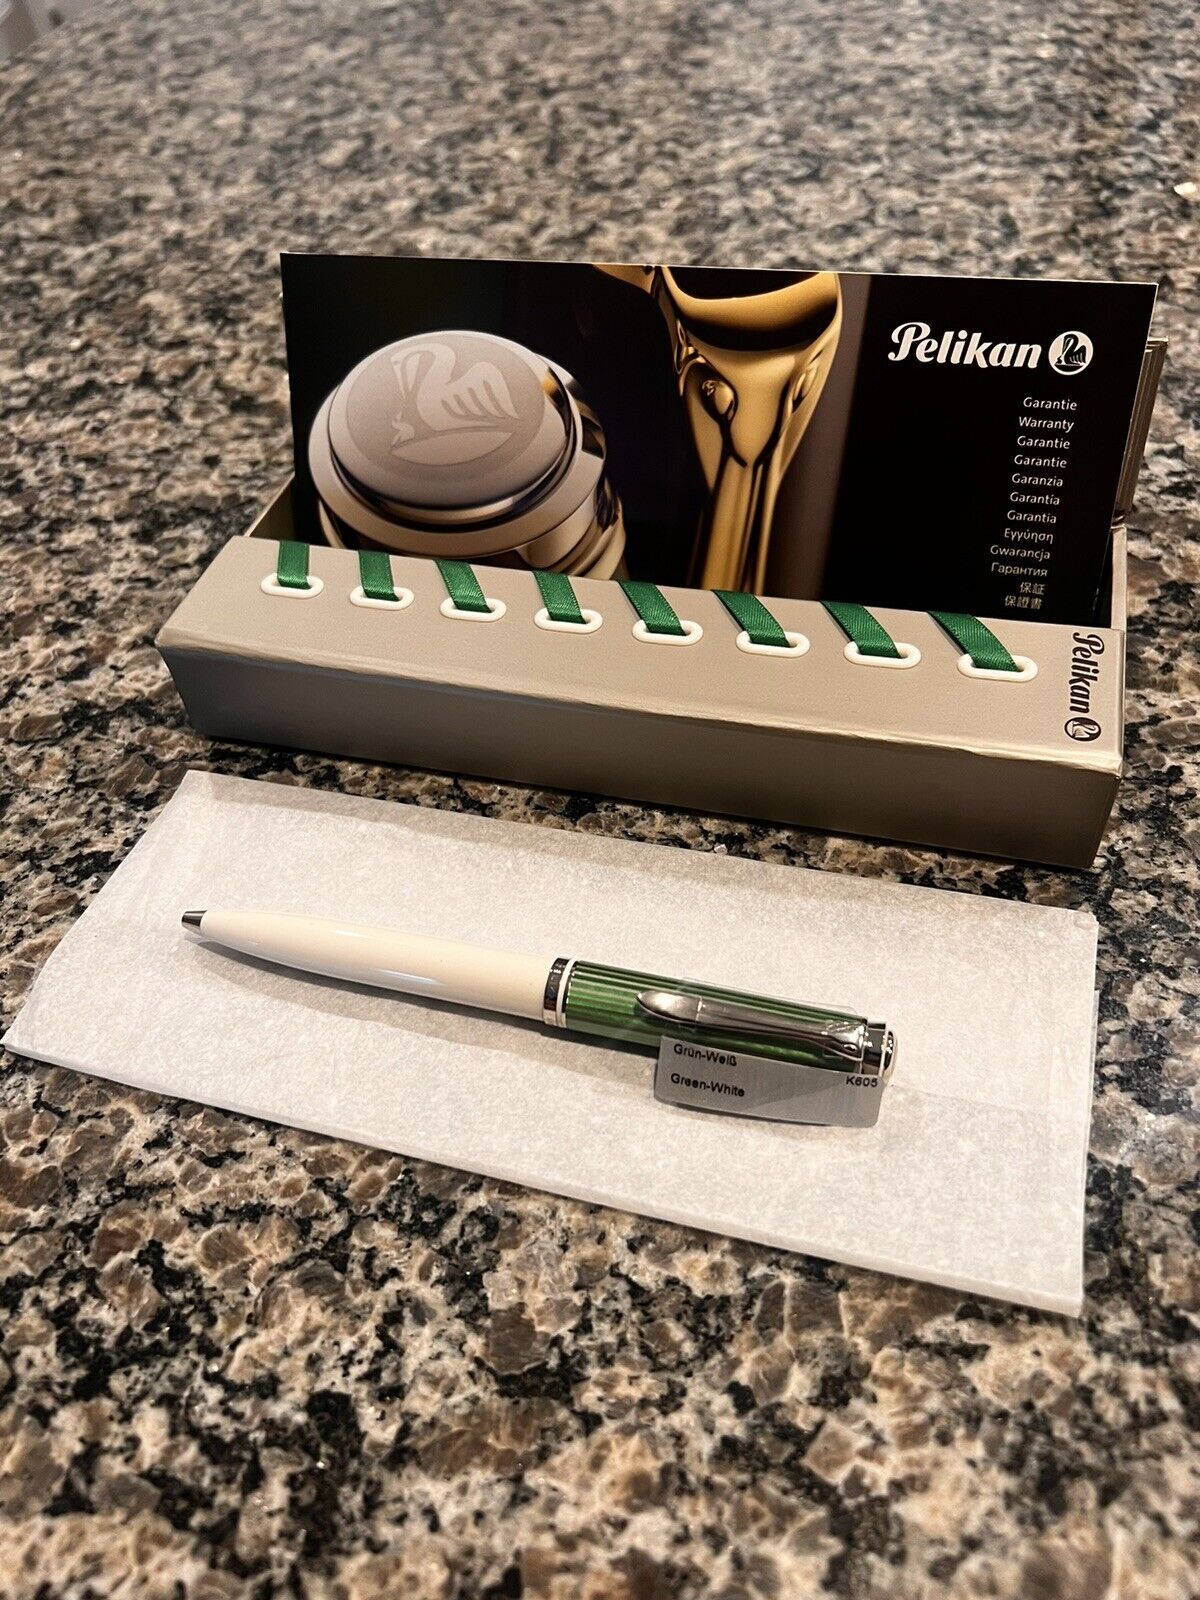 Pelikan Souveran 605 Ballpoint Pen in Green-White with Silver Trim - NEW in Box